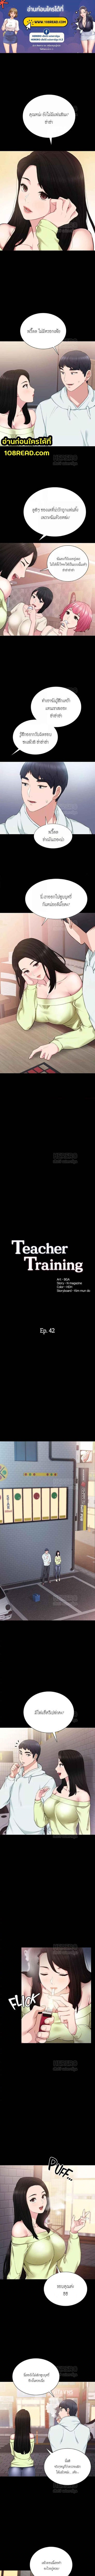 Teaching Practice 42 1